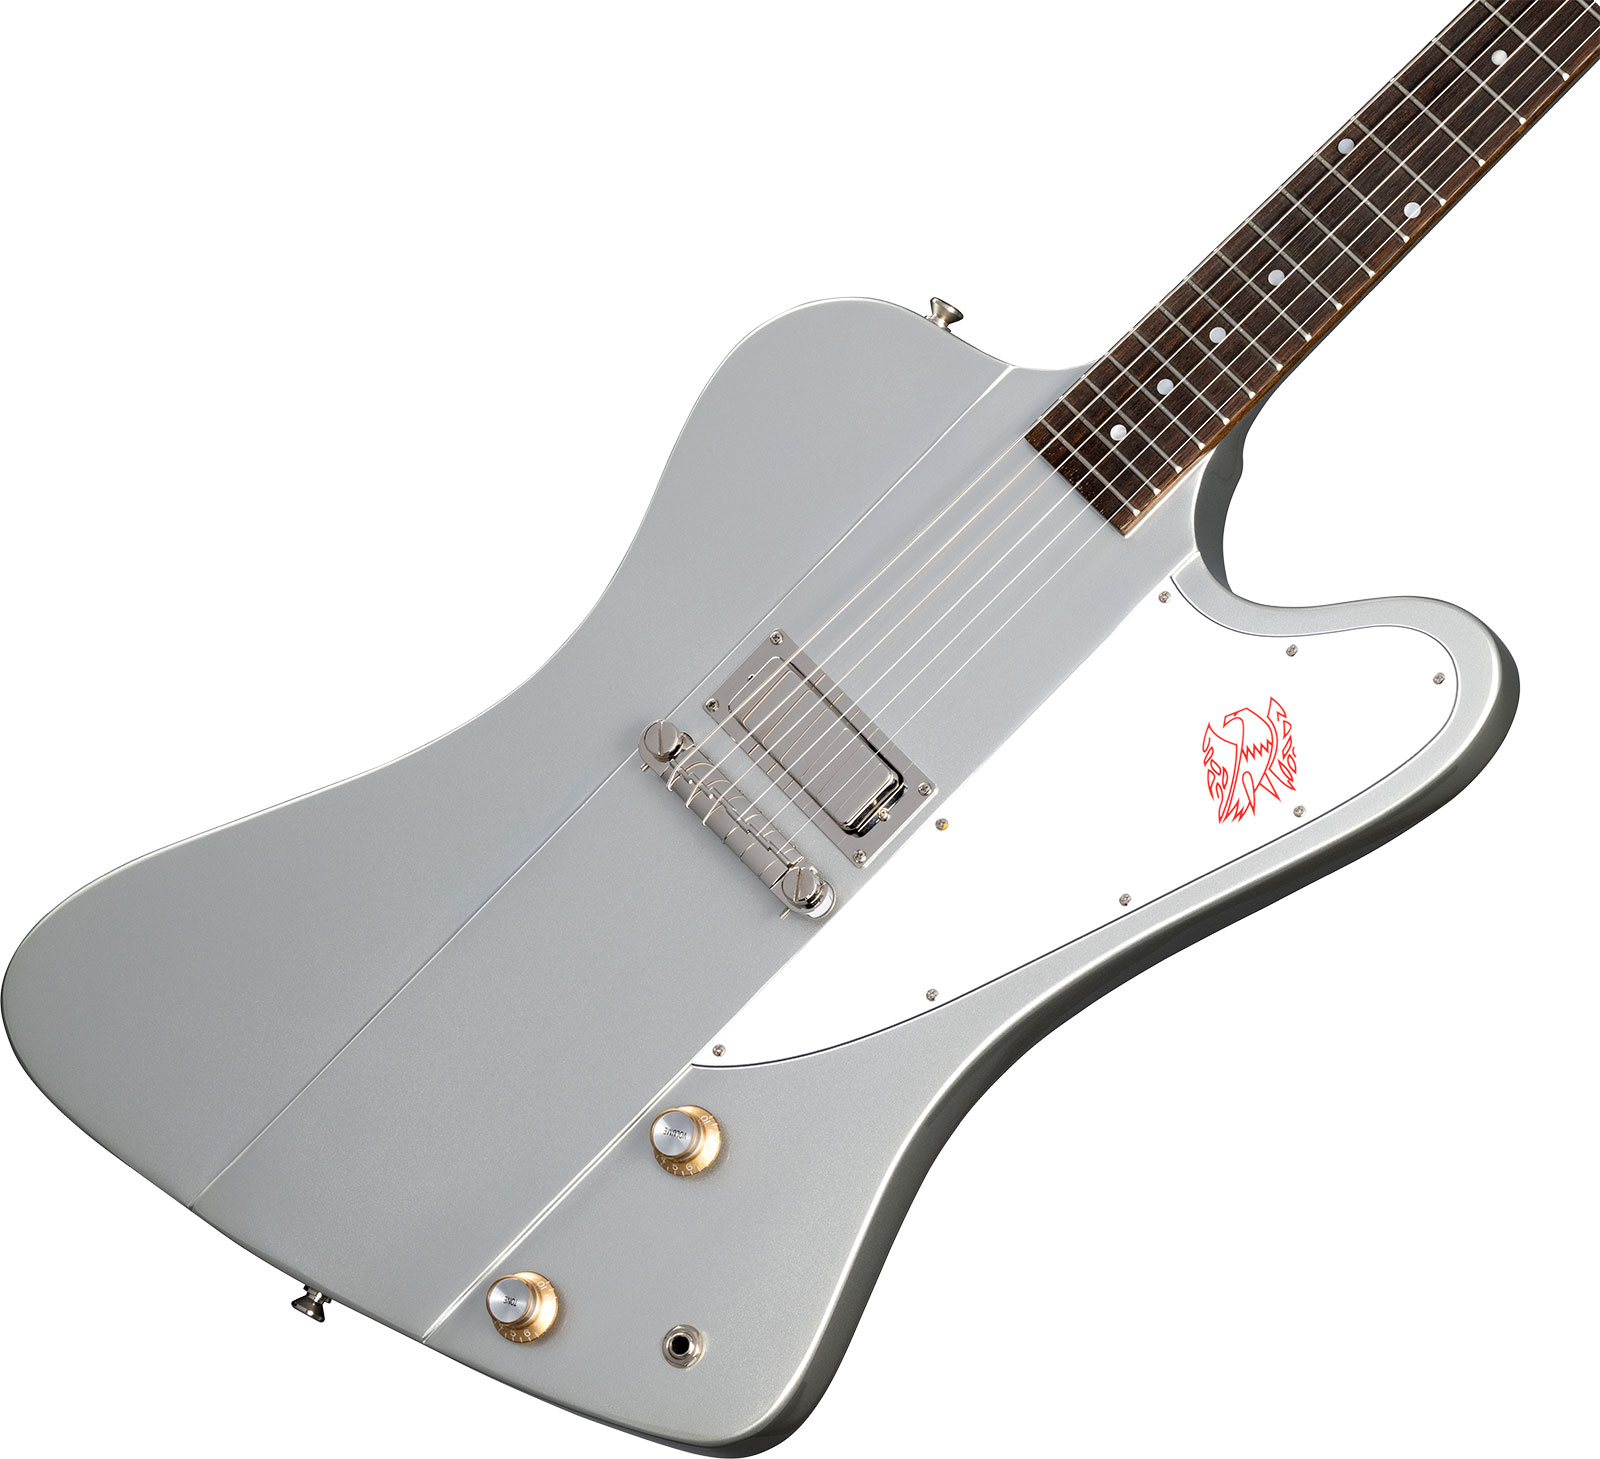 Epiphone Firebird I 1963 Inspired By Gibson Custom 1mh Ht Lau - Silver Mist - Guitarra electrica retro rock - Variation 3